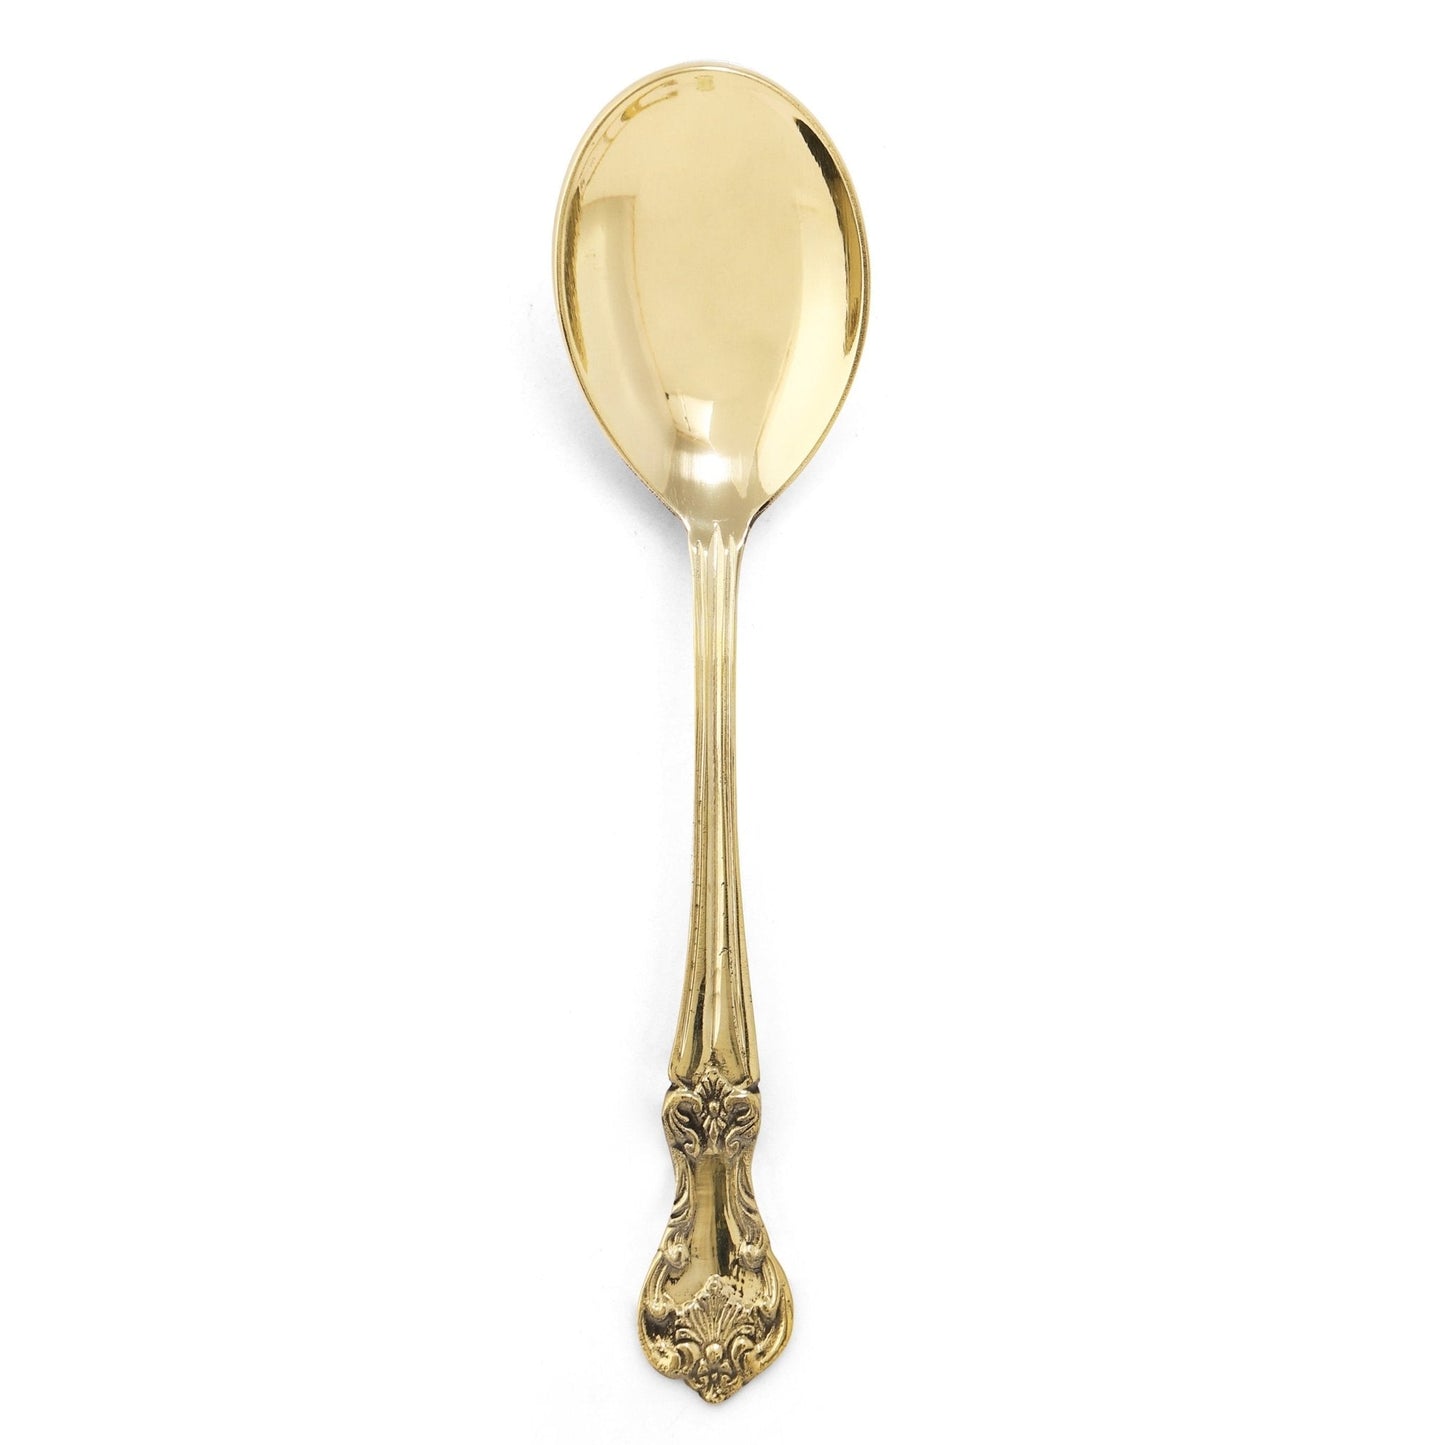 SAMA Homes - brass serving spoon